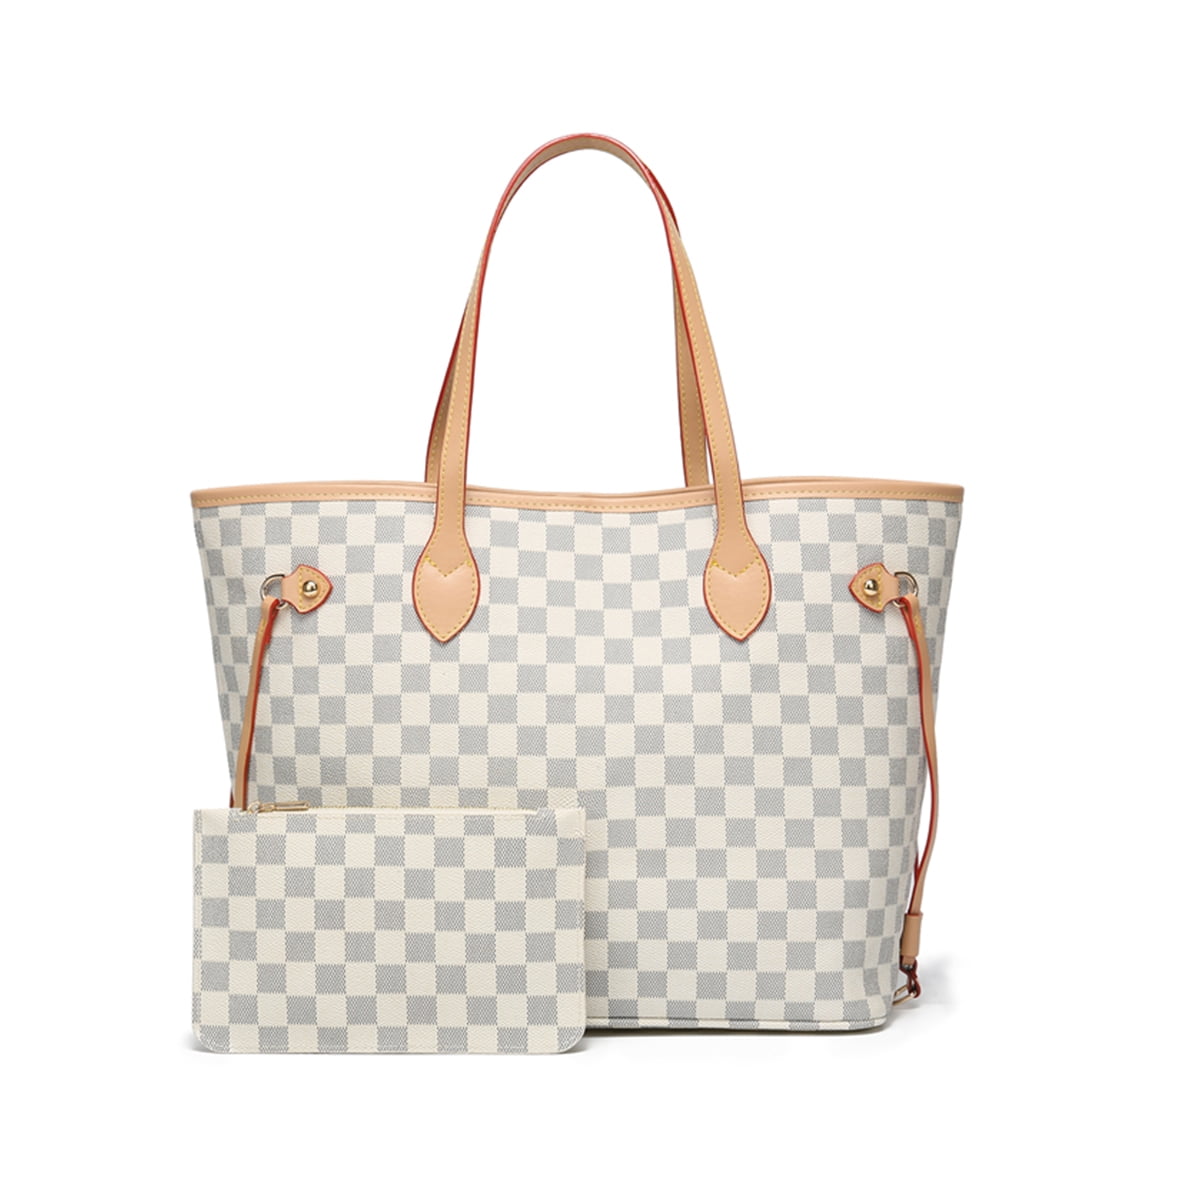 Women Tote Bag Faux Leather Handbags Casual Ladies Shoulder Bags for Shopping Tote Shoulder Bags Handbags